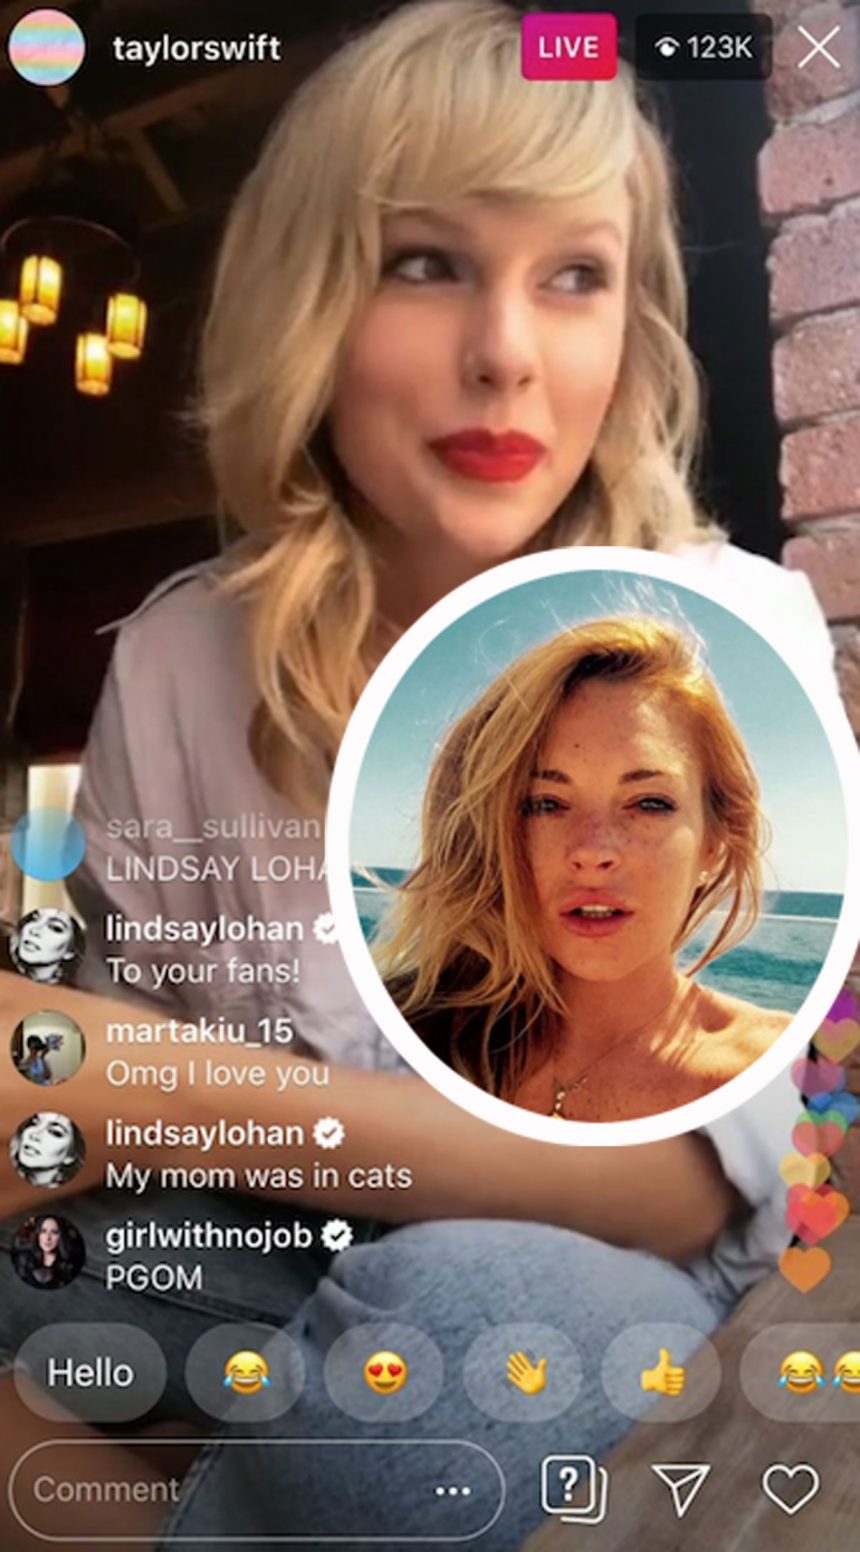 Lindsay Lohan Leaves Random Comments On Taylor Swifts Instagram